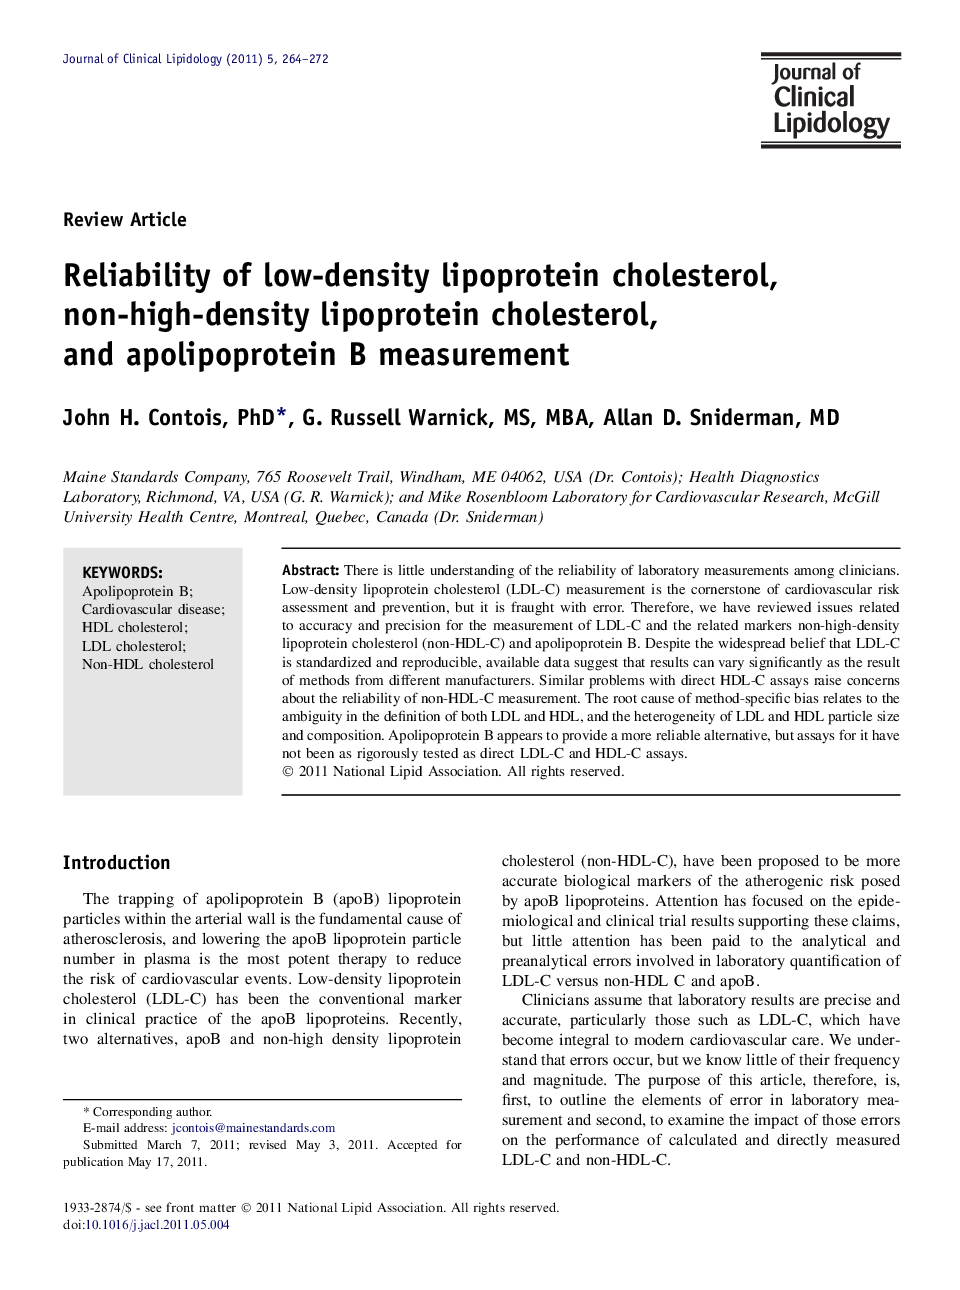 Reliability of low-density lipoprotein cholesterol, non-high-density lipoprotein cholesterol, and apolipoprotein B measurement